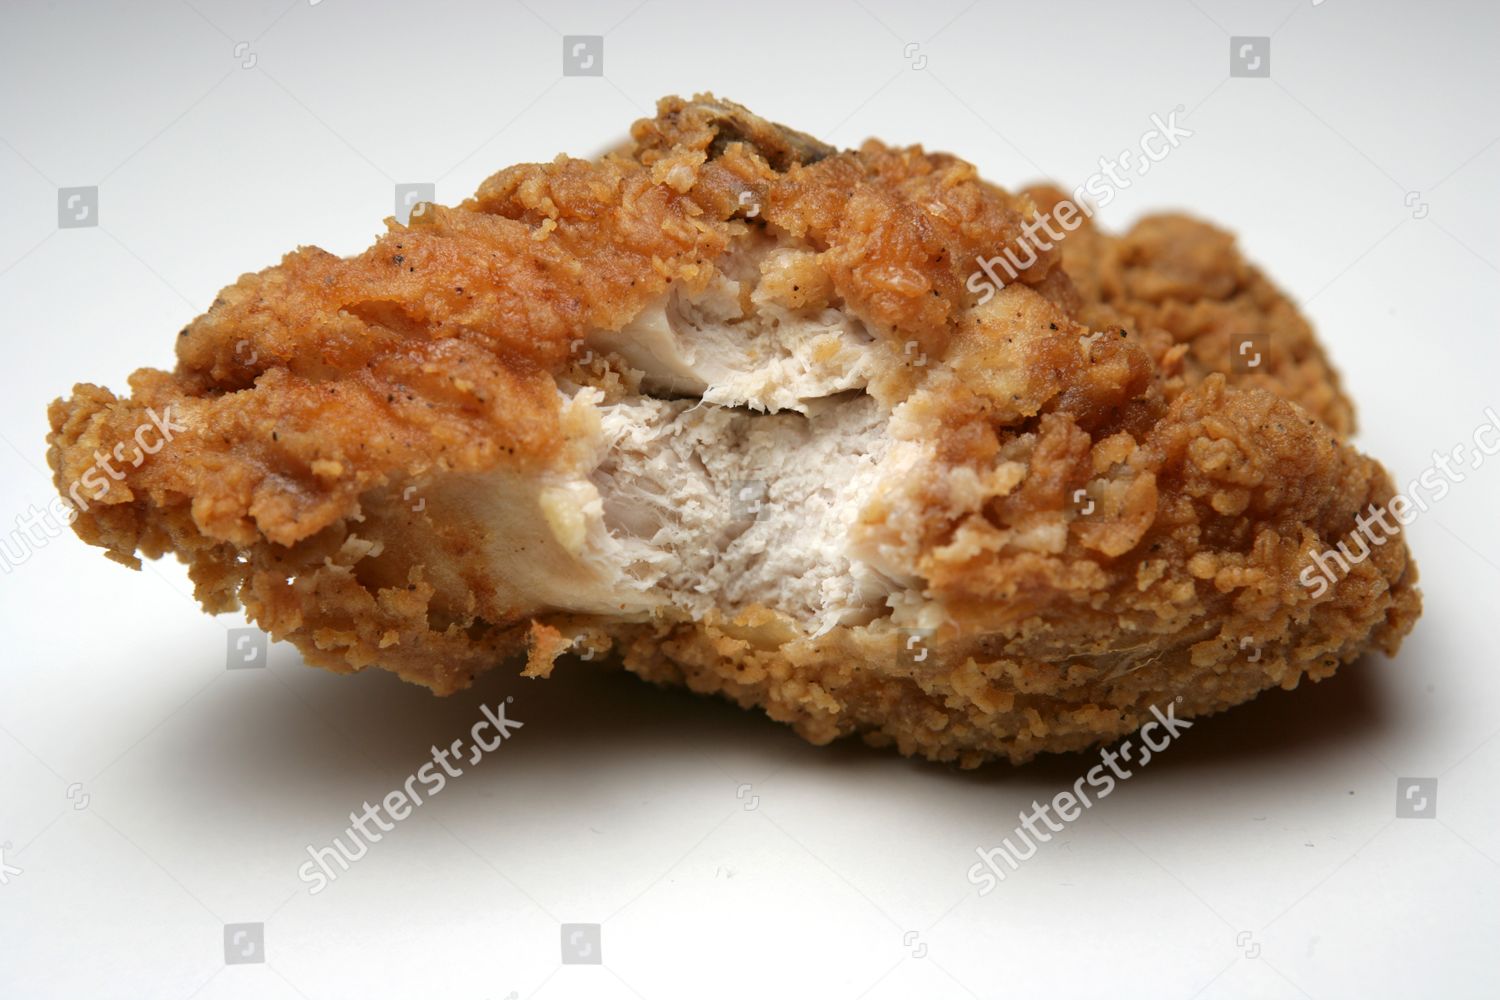 kfc extra crispy fried chicken